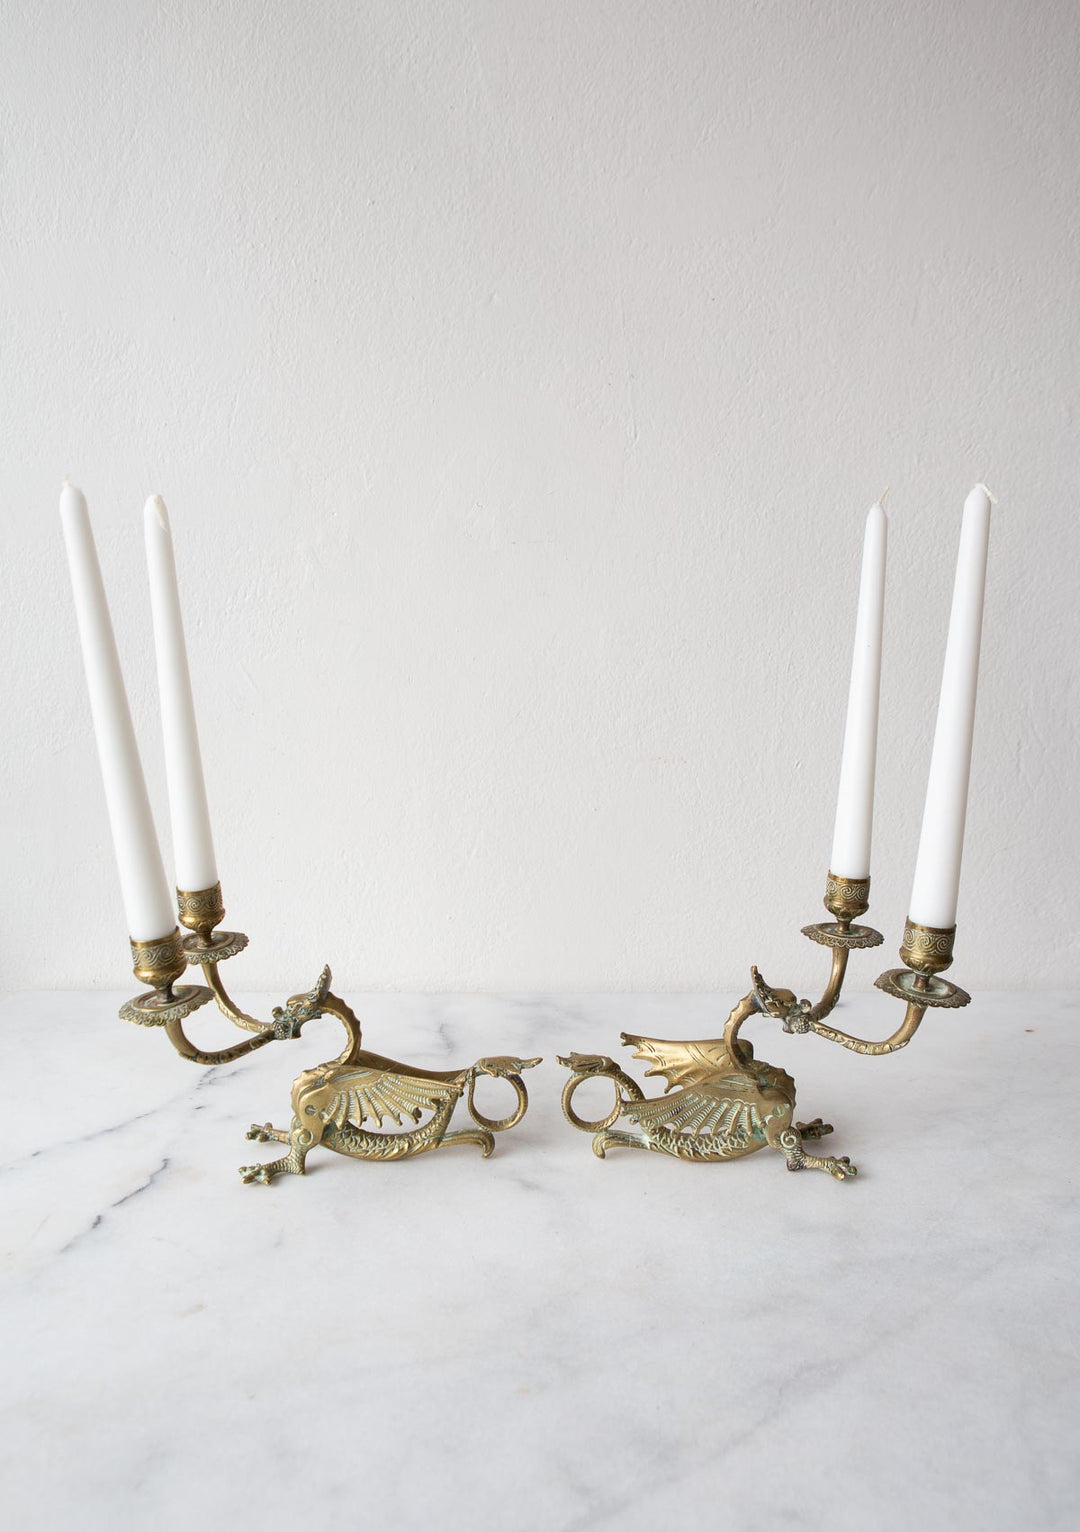 Antiguos candeleros quimeras o dragones. Francia aprox. 1900 antique French dragon candleholders